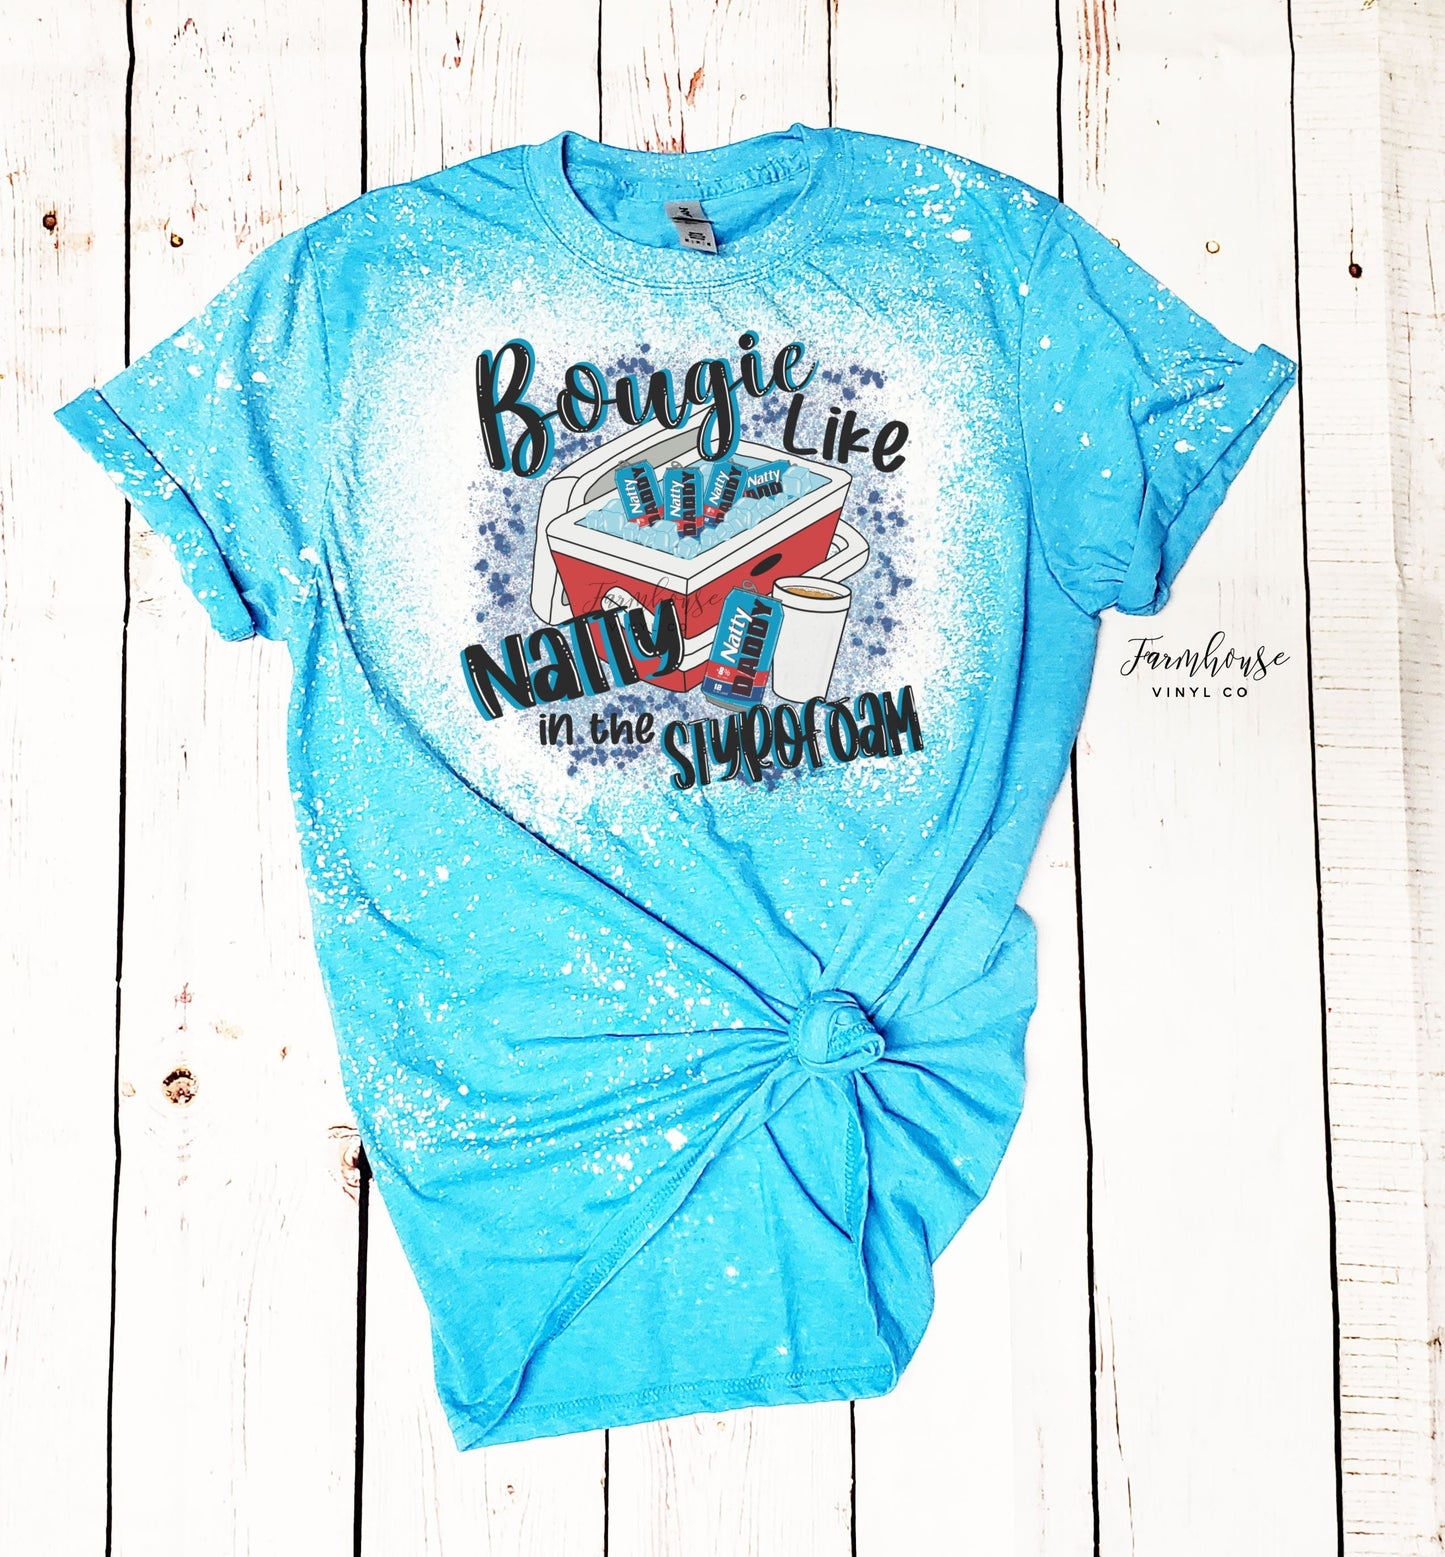 Bougie like Natty Bleached Shirt / Fancy Like Tee / Trendy shirt / Mom tee / Country Music Fan Shirt / concert shirt / Music Bleached Shirt - Farmhouse Vinyl Co